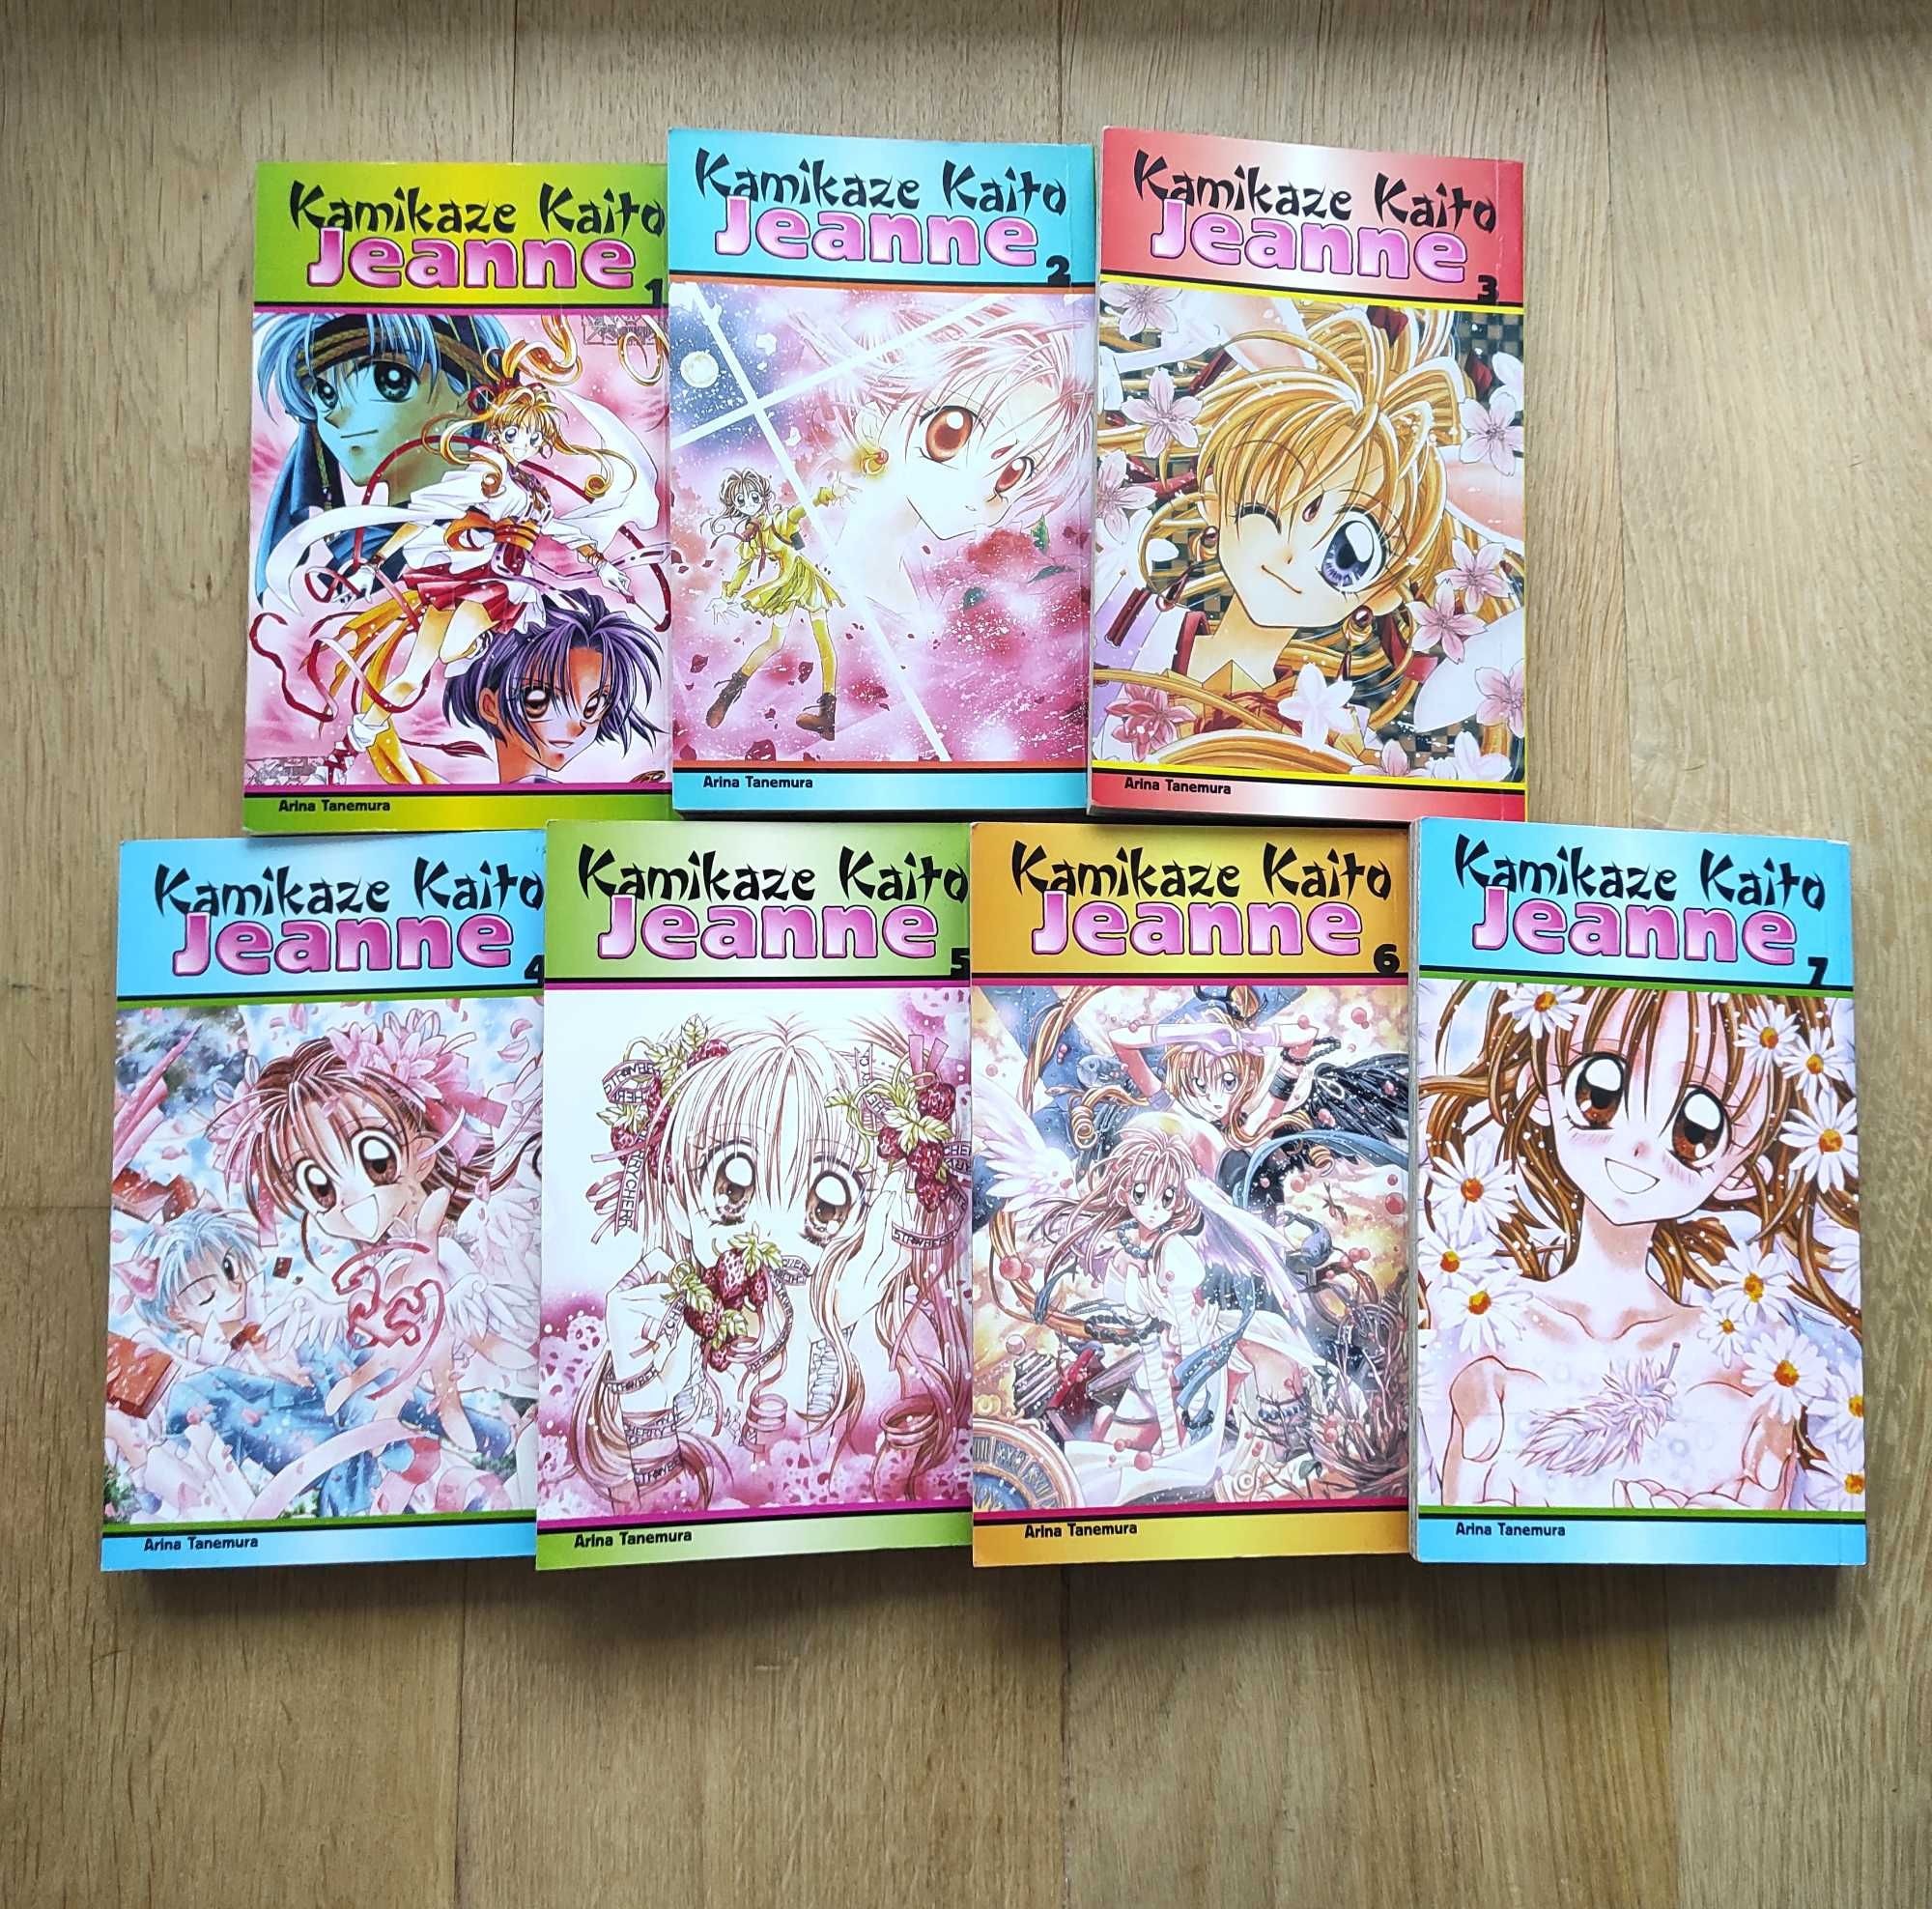 Kamikaze Kaito Jeanne, manga, komplet tomów 1-7